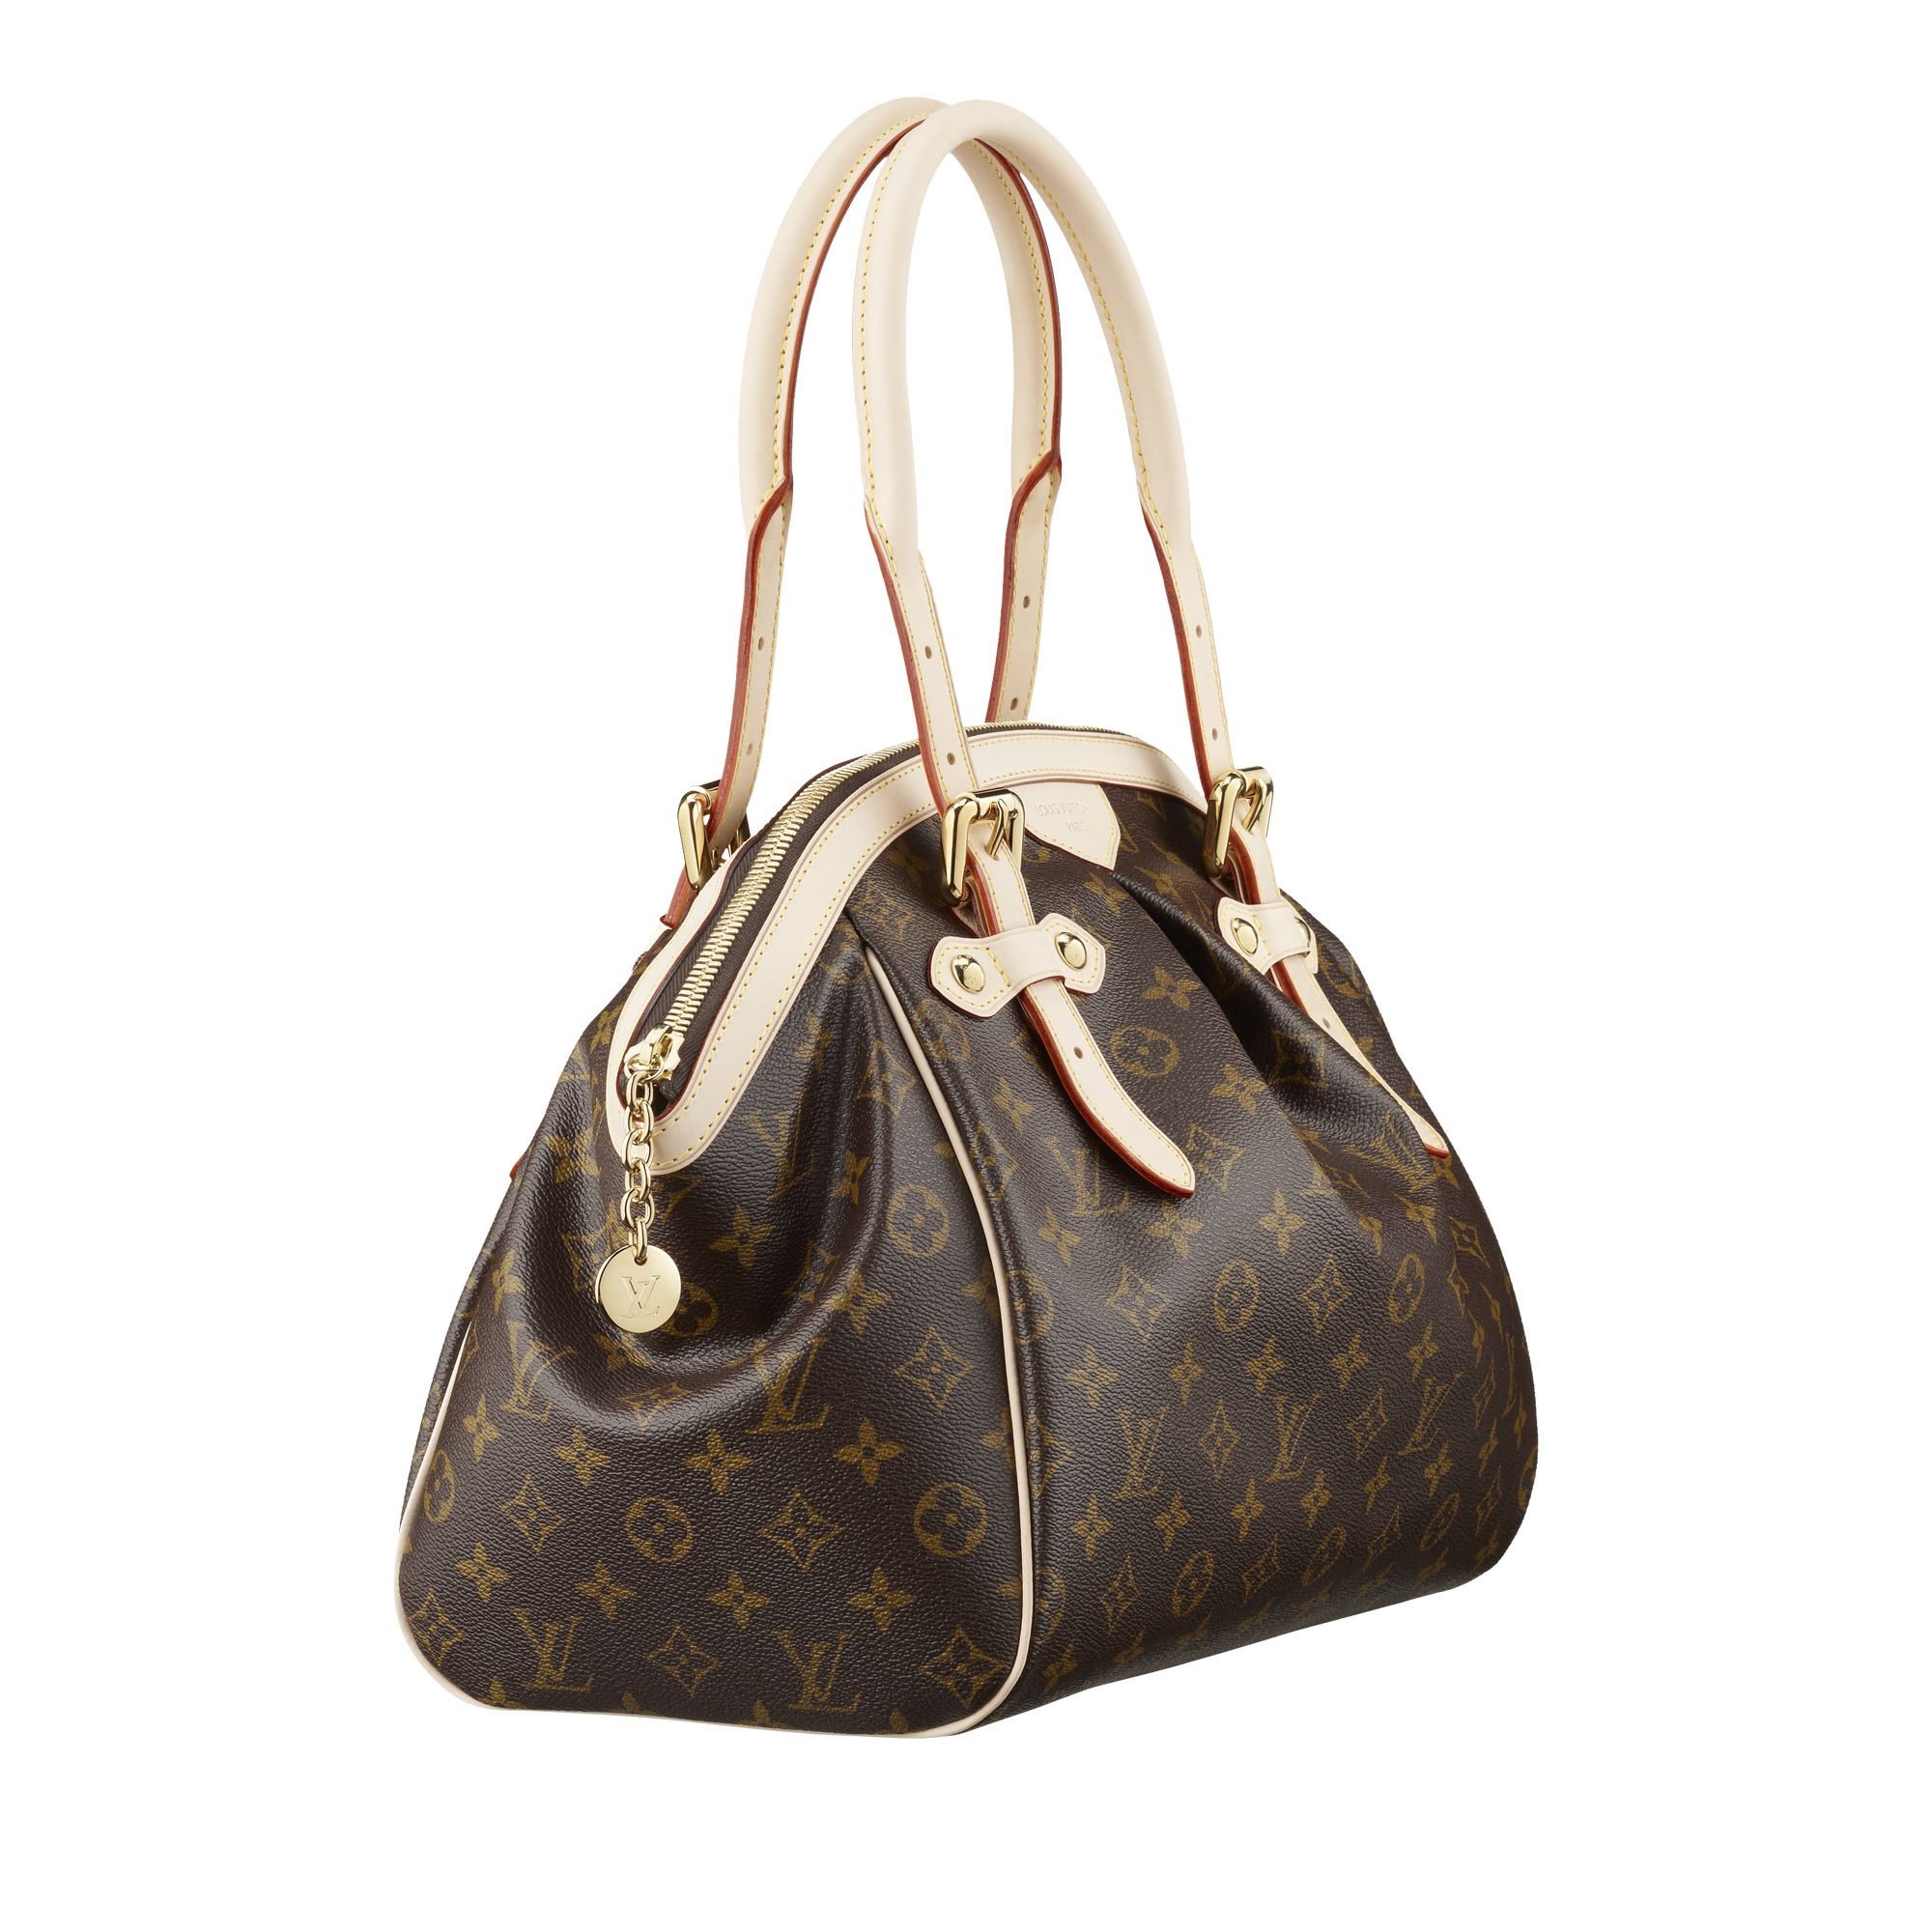 Louis Vuitton Women bag PNG image, Purse PNG - Free PNG